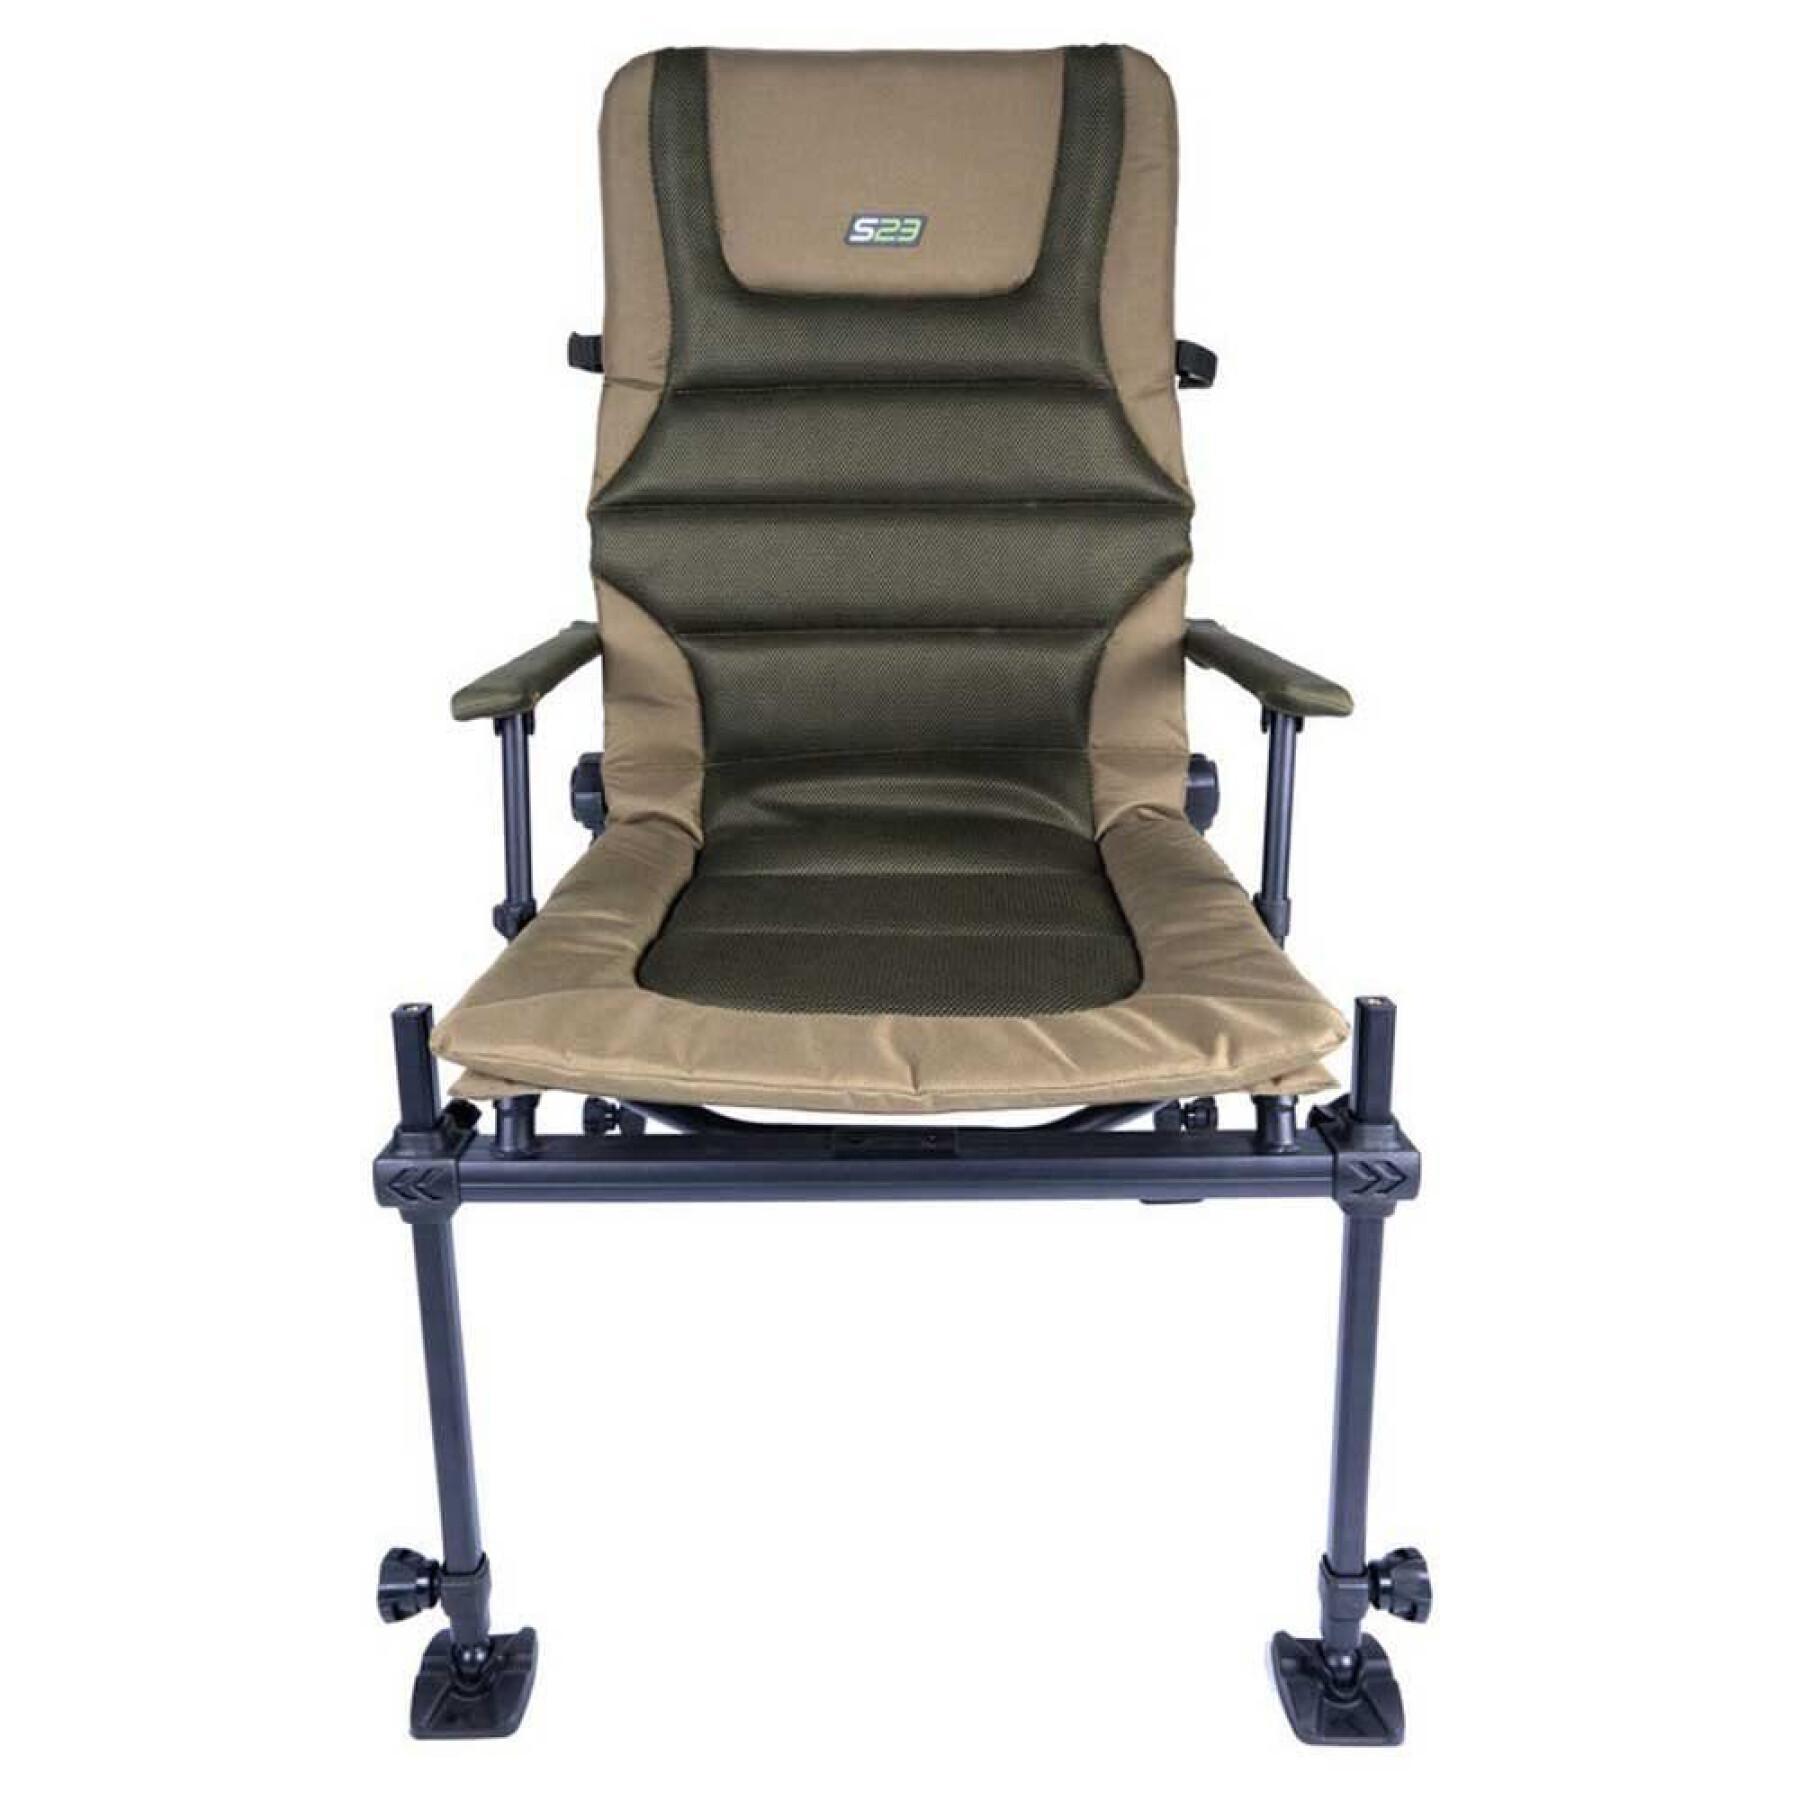 Chaise Korum S23 Accessory Chairs Standard